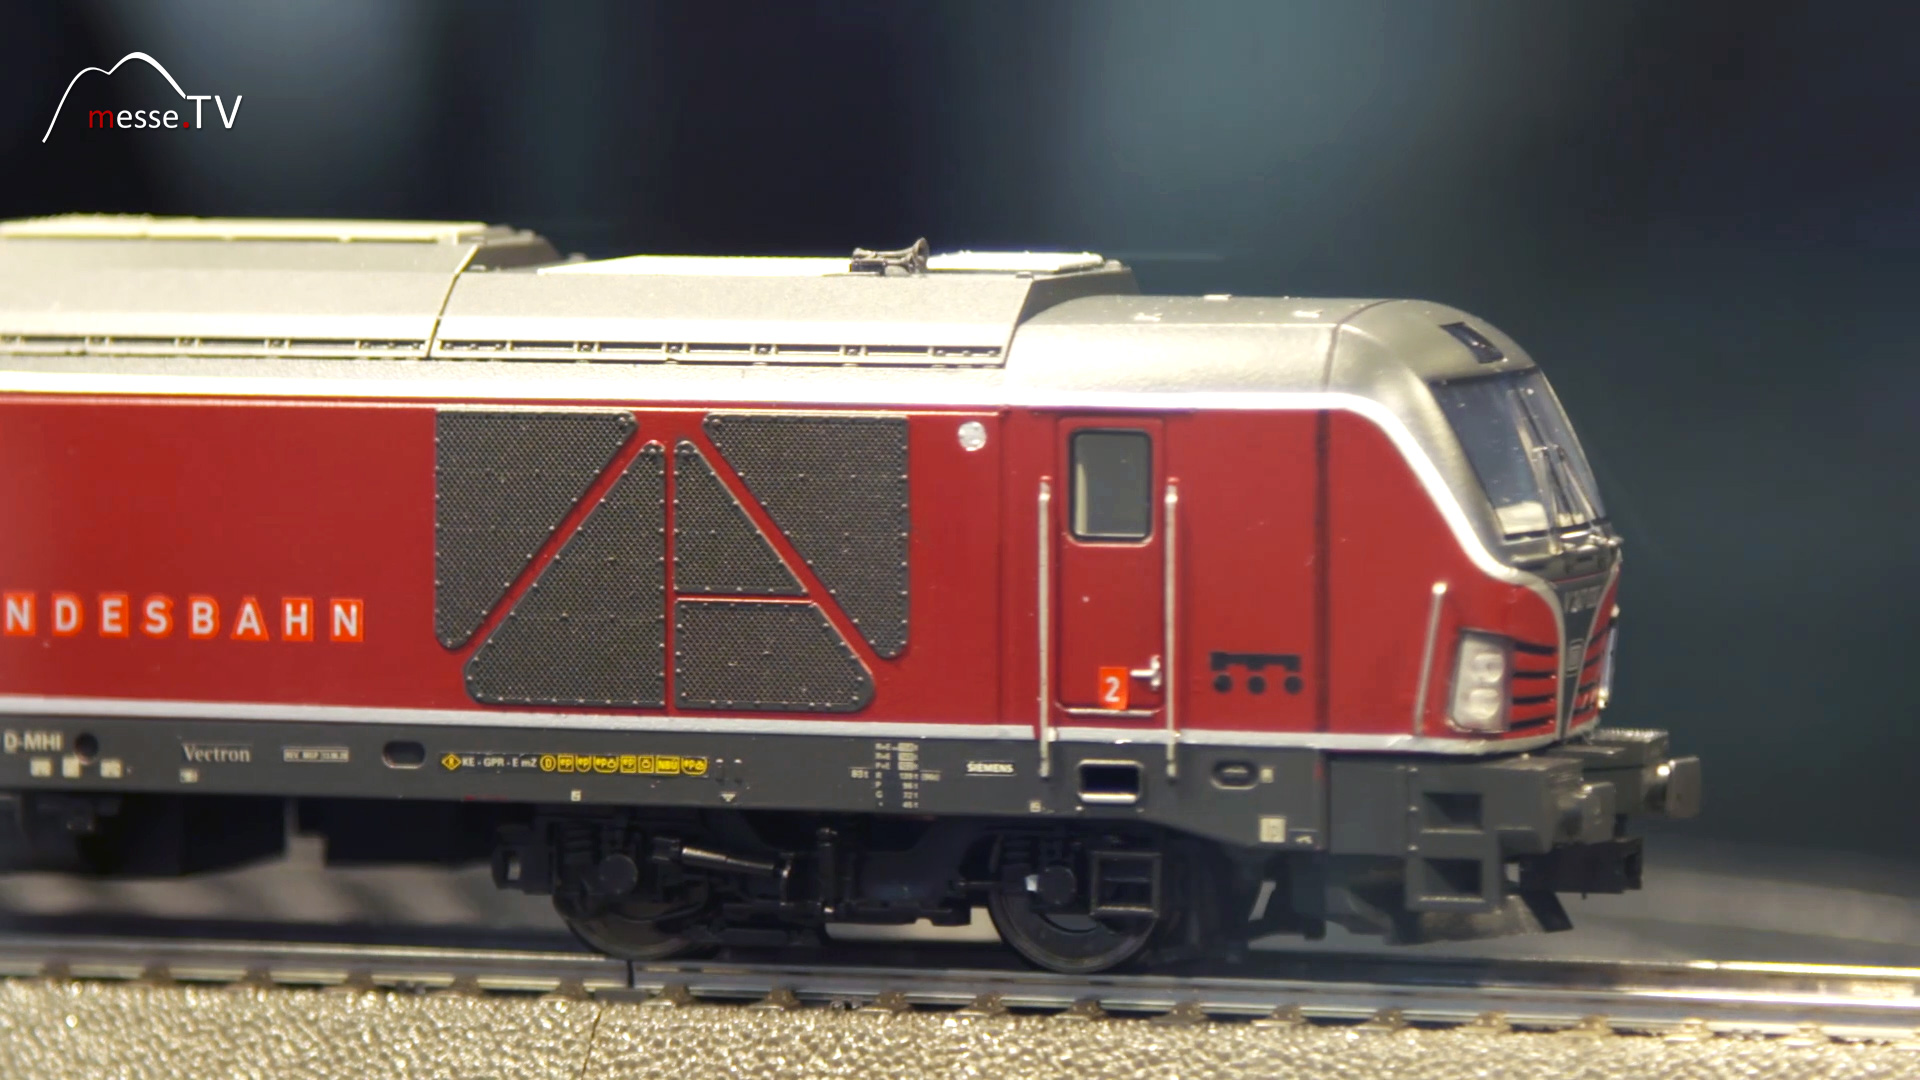 Märklin model railway Spielwarenmesse 2020 Nuremberg